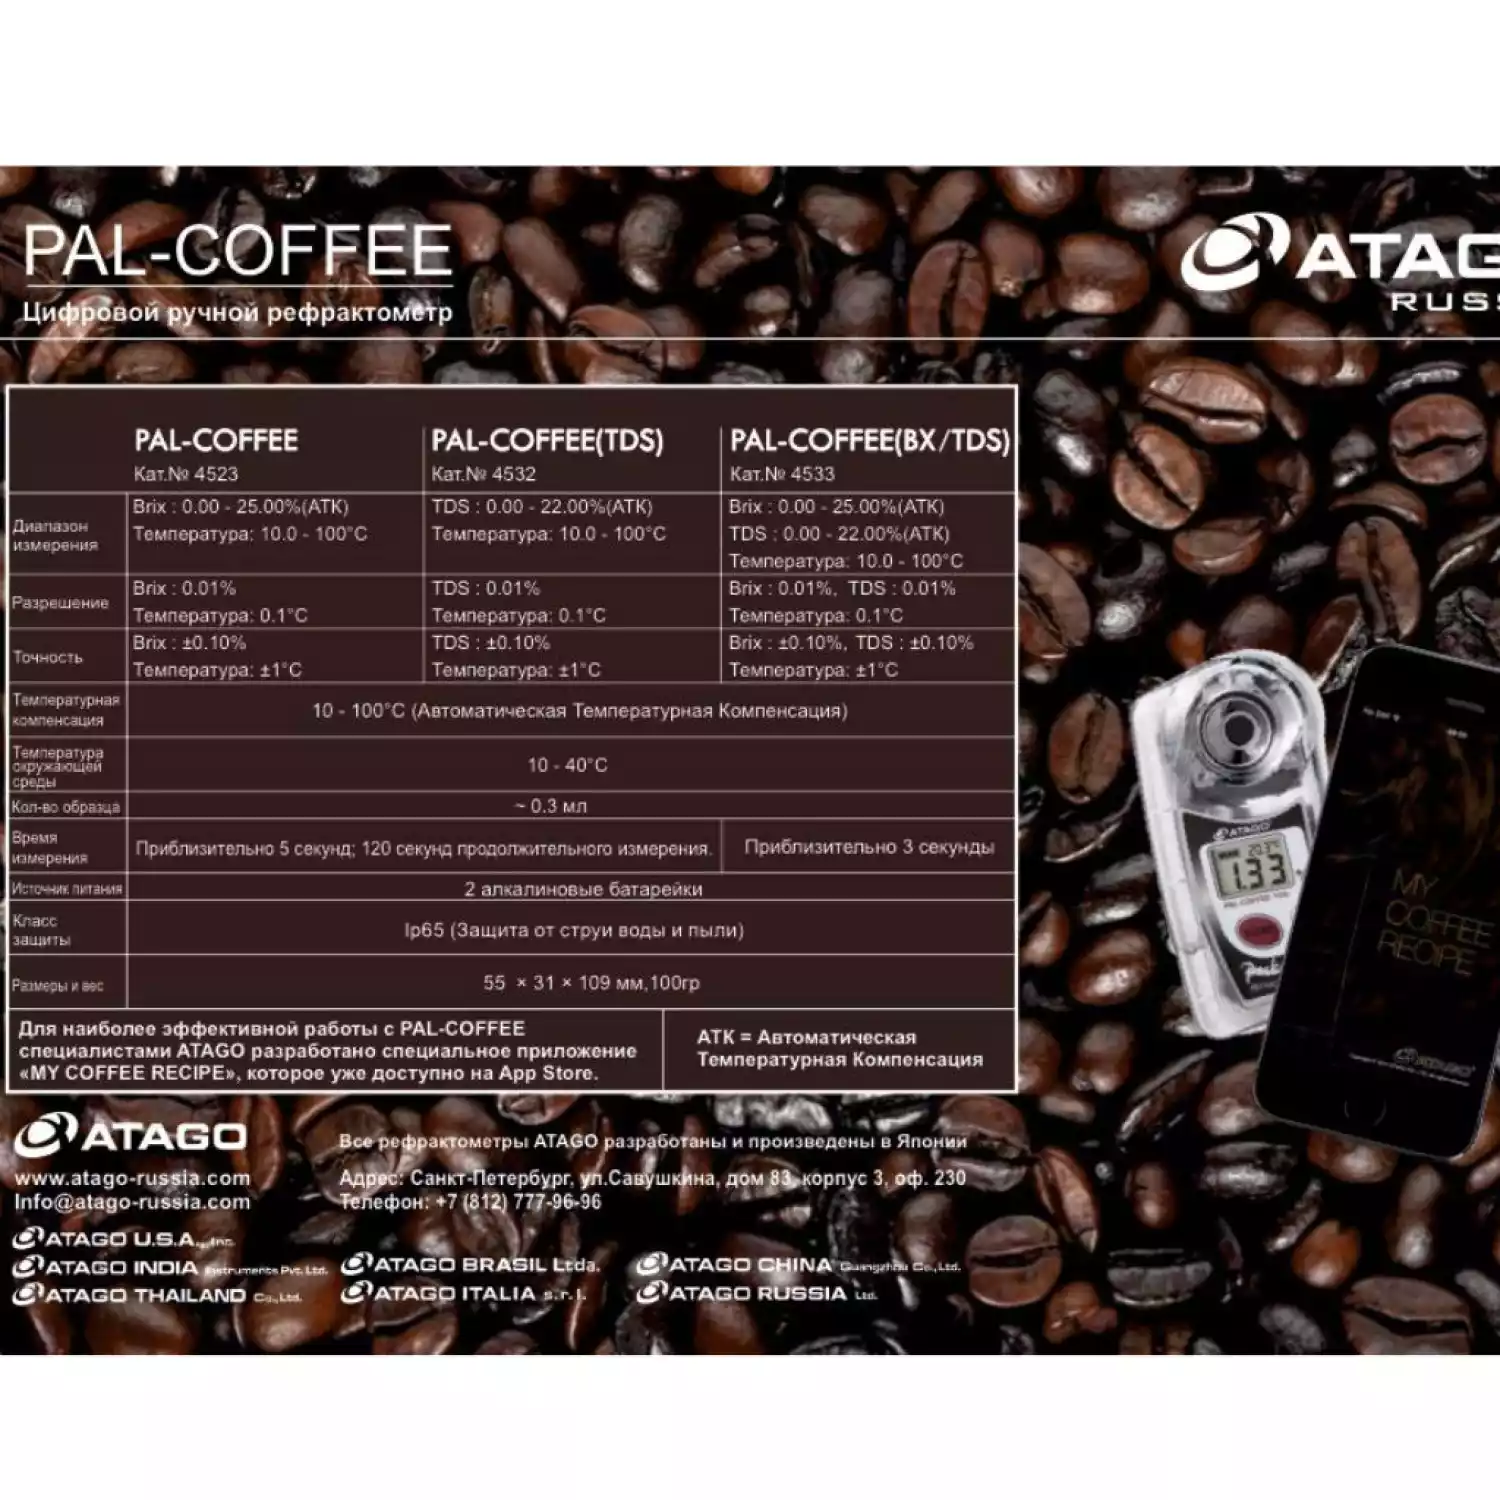 PAL-COFFEE (BX/TDS) рефрактометр - 2